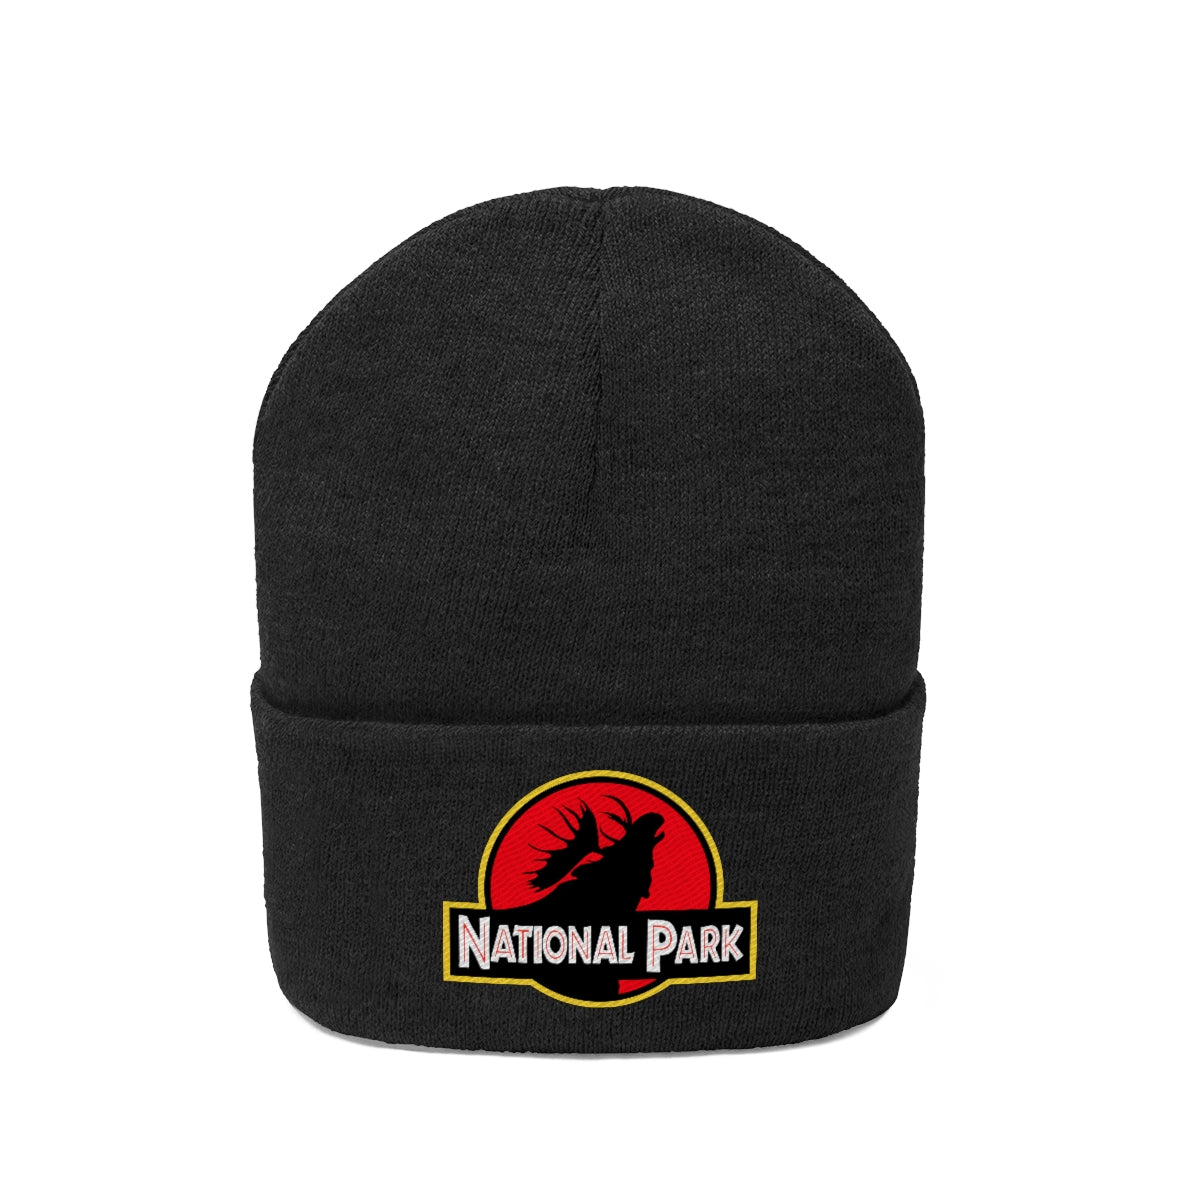 Moose National Park Hat - Knit Beanie Sewn Parody Logo